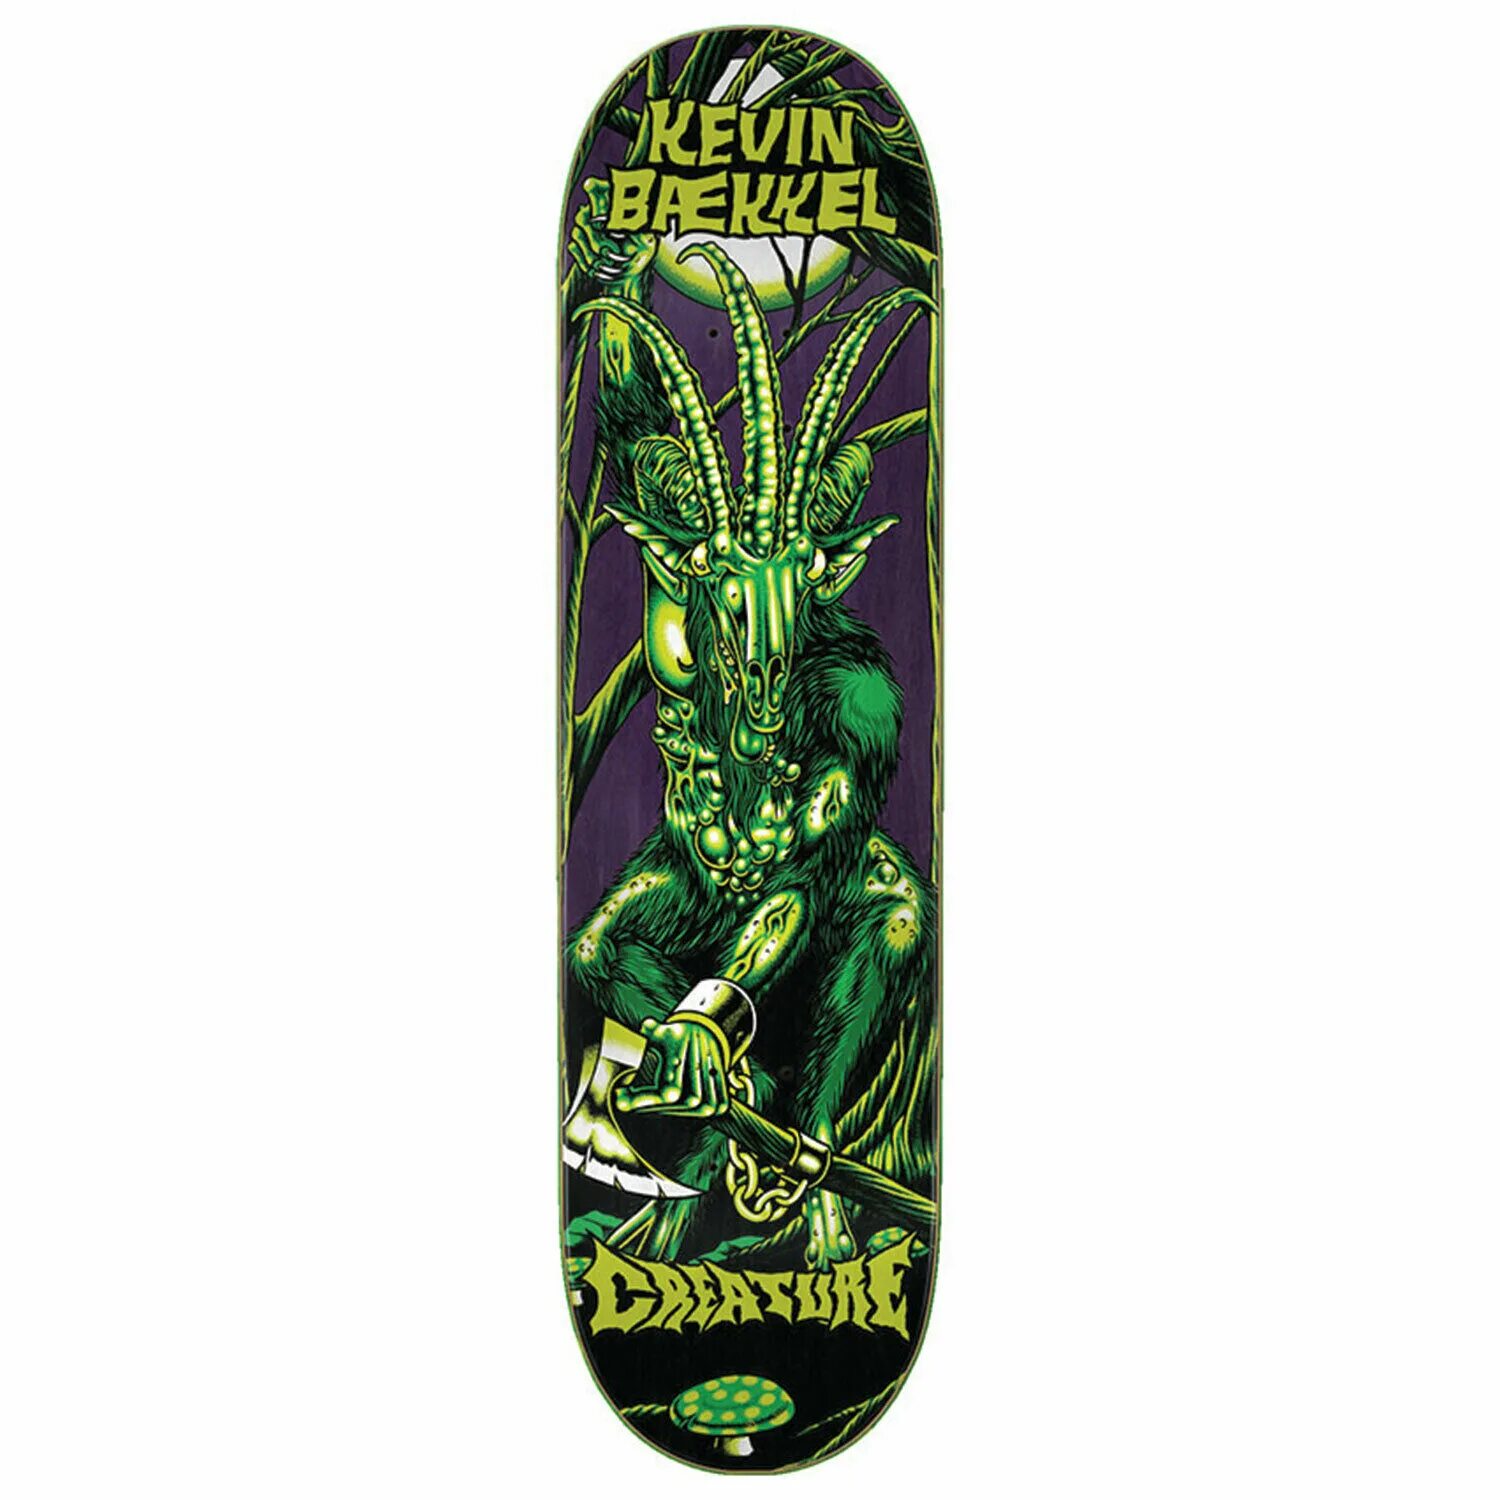 Скейтборд creature. Creature Skate Deck. Creature Deck Vikings Skate. Lockwood skateboarder creature. Creature цена